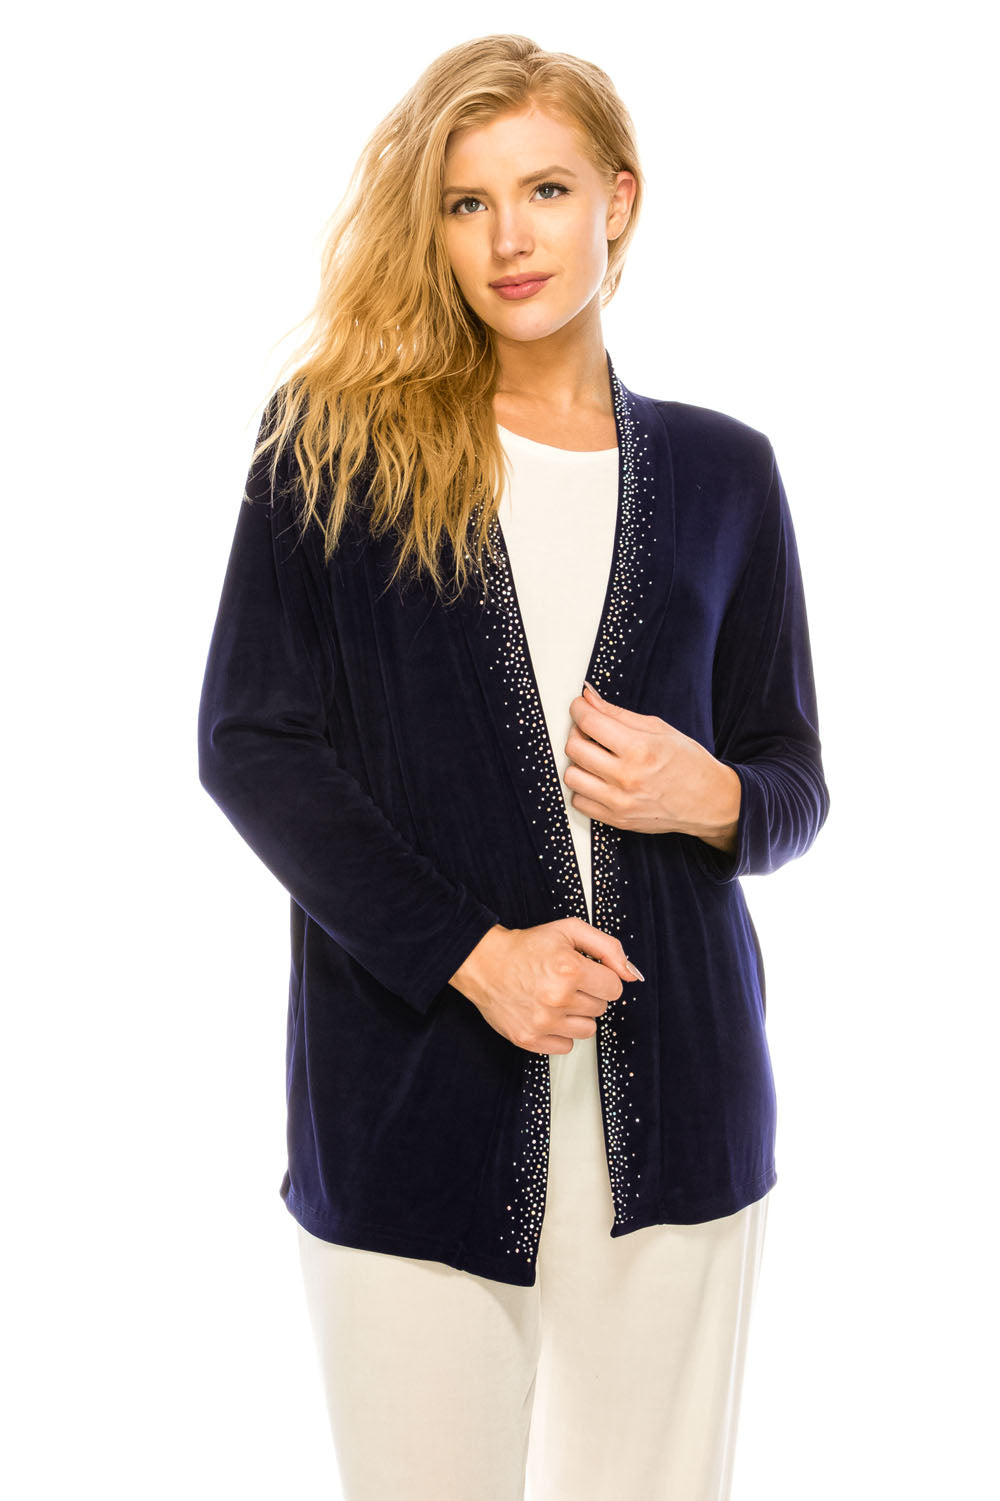 Jostar Women's Non Iron Drape Jacket Long Sleeve Rhinestones-400AY-L-R-R080 - Jostar Online